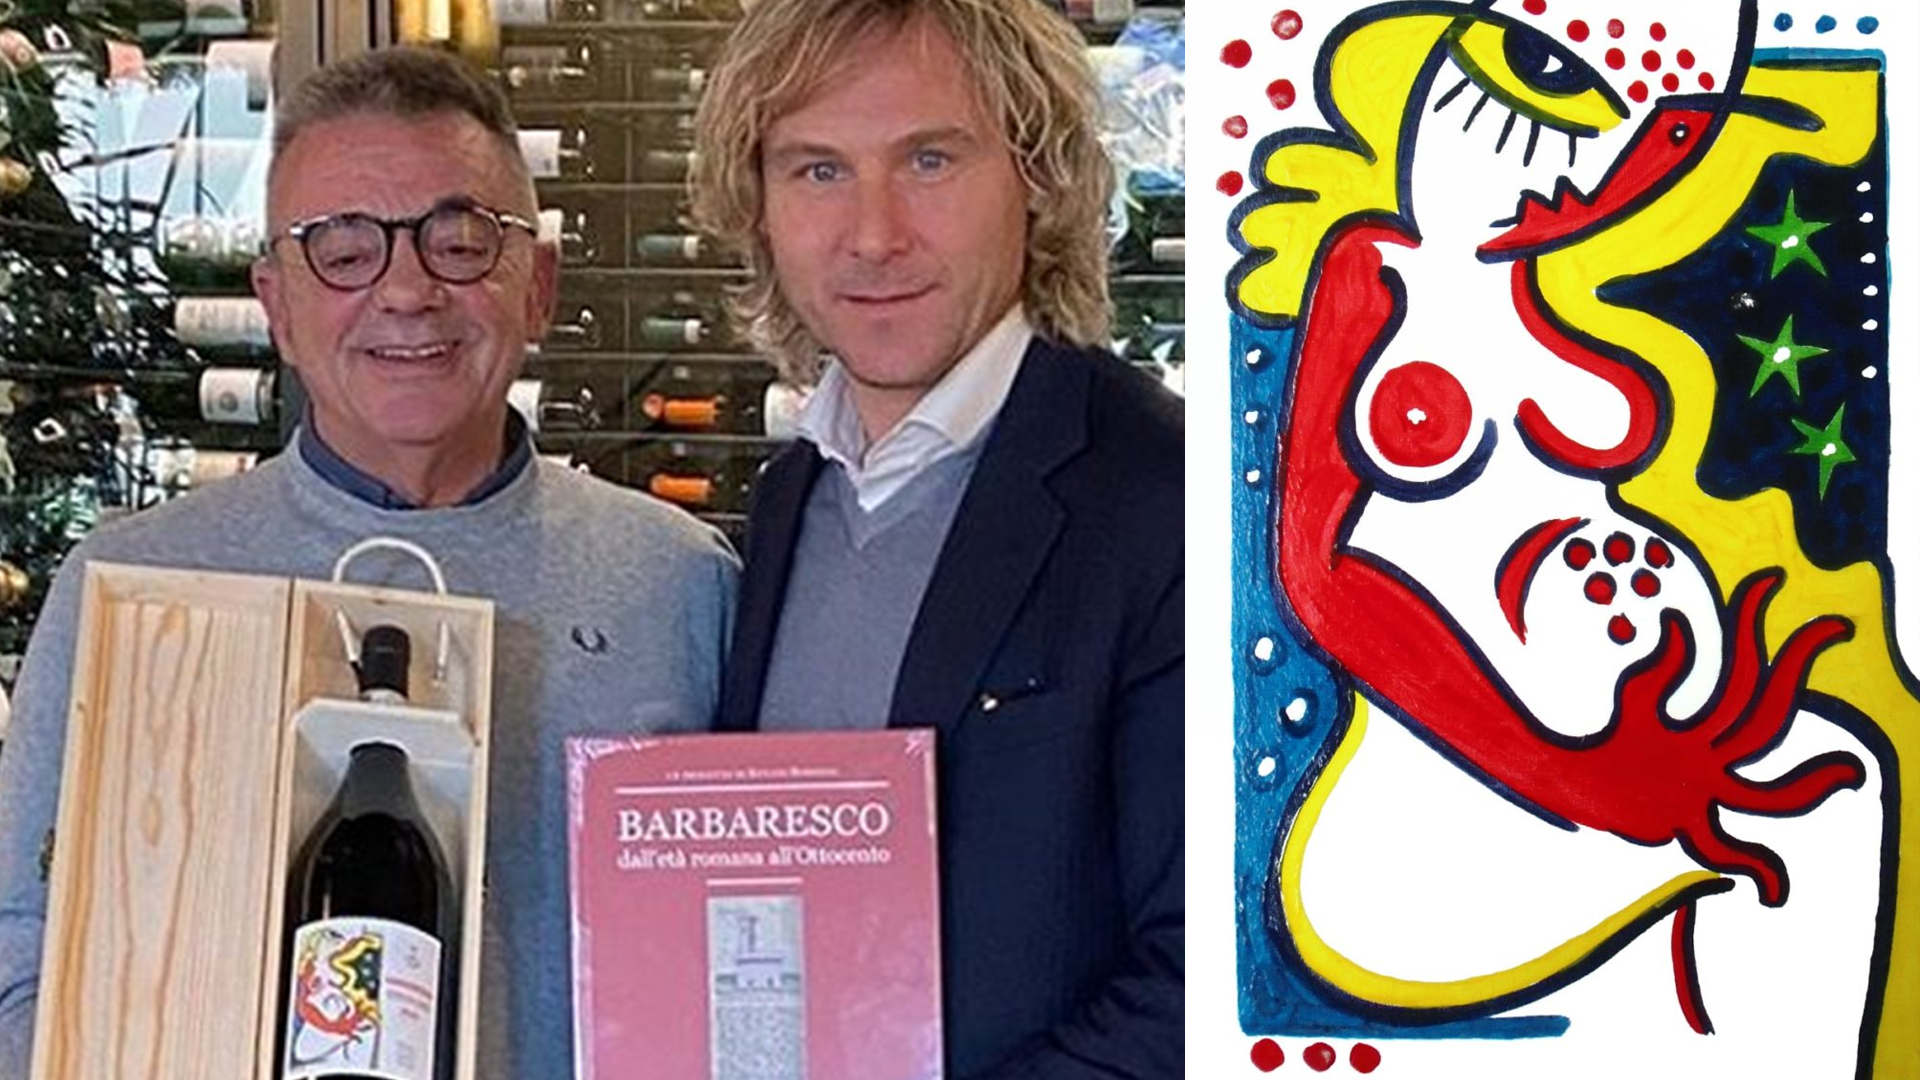 Pavel Nedved riceve bottiglia con etichetta disegnata da Vigliaturo - Eccellenze Italiane TV